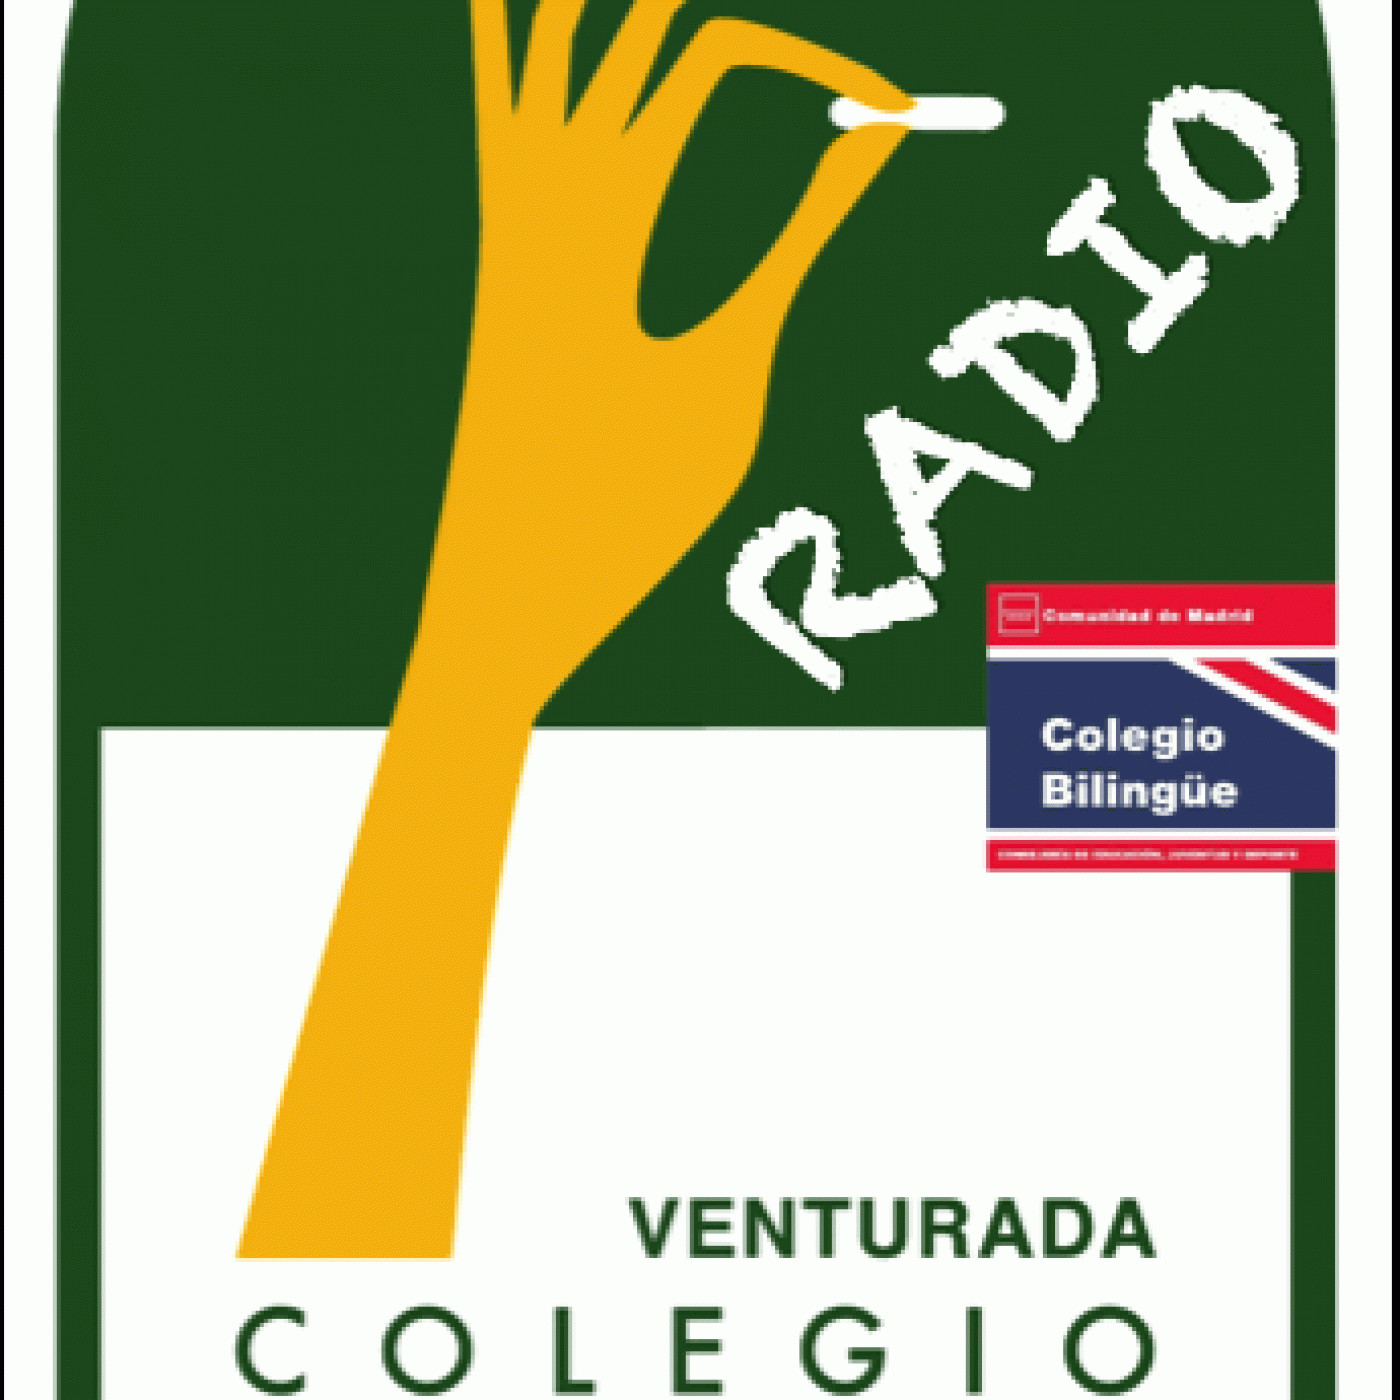 Radio Puerta de la Sierra